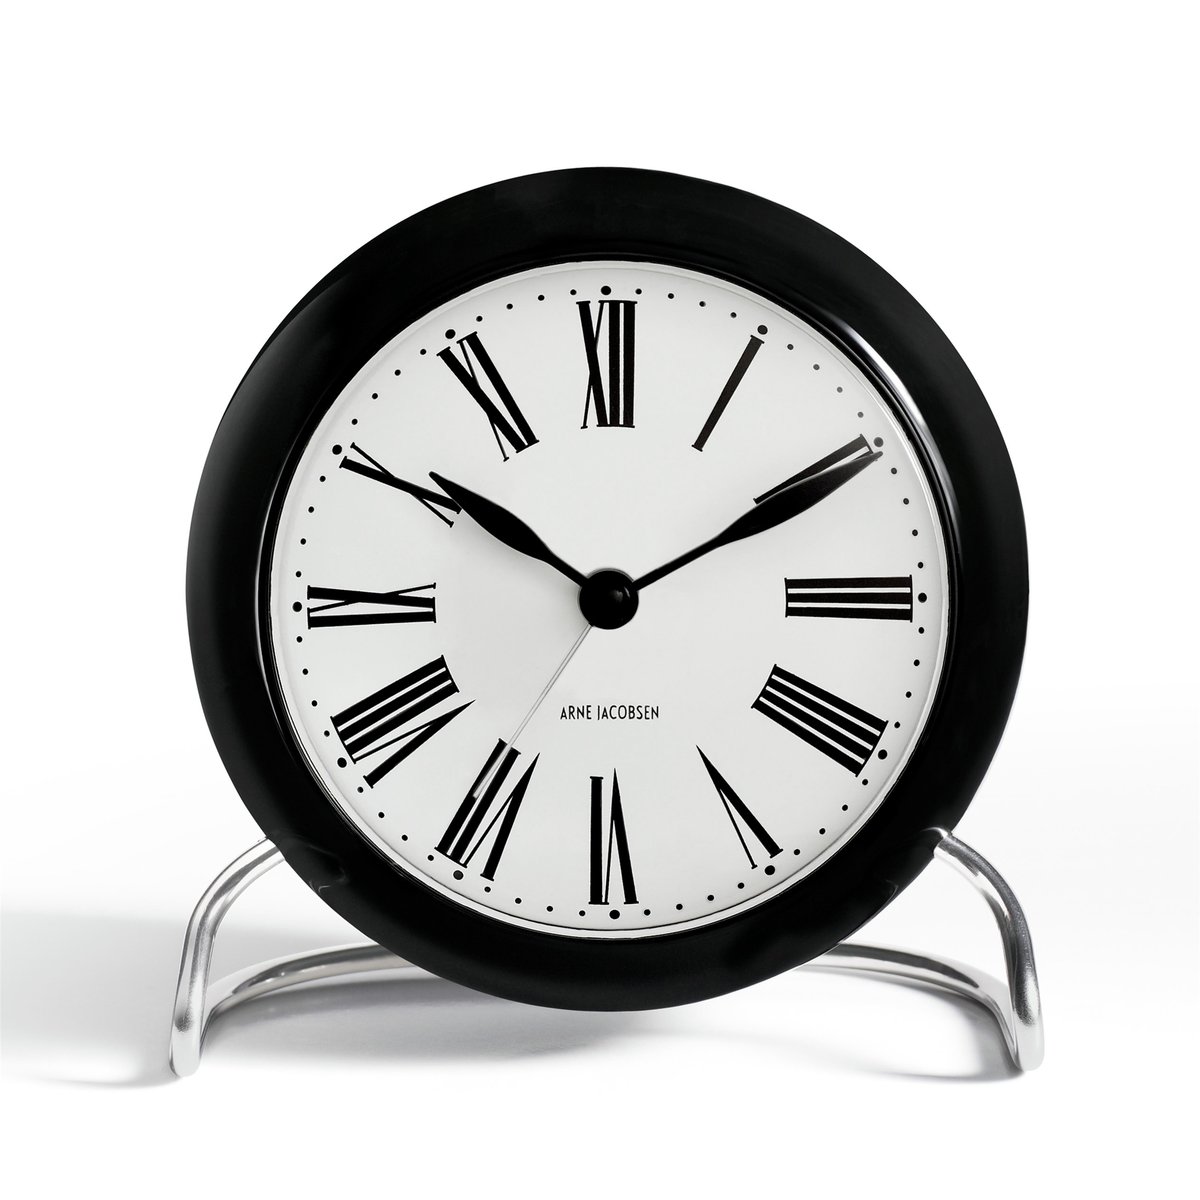 Arne Jacobsen Clocks AJ Roman tafel klok zwart